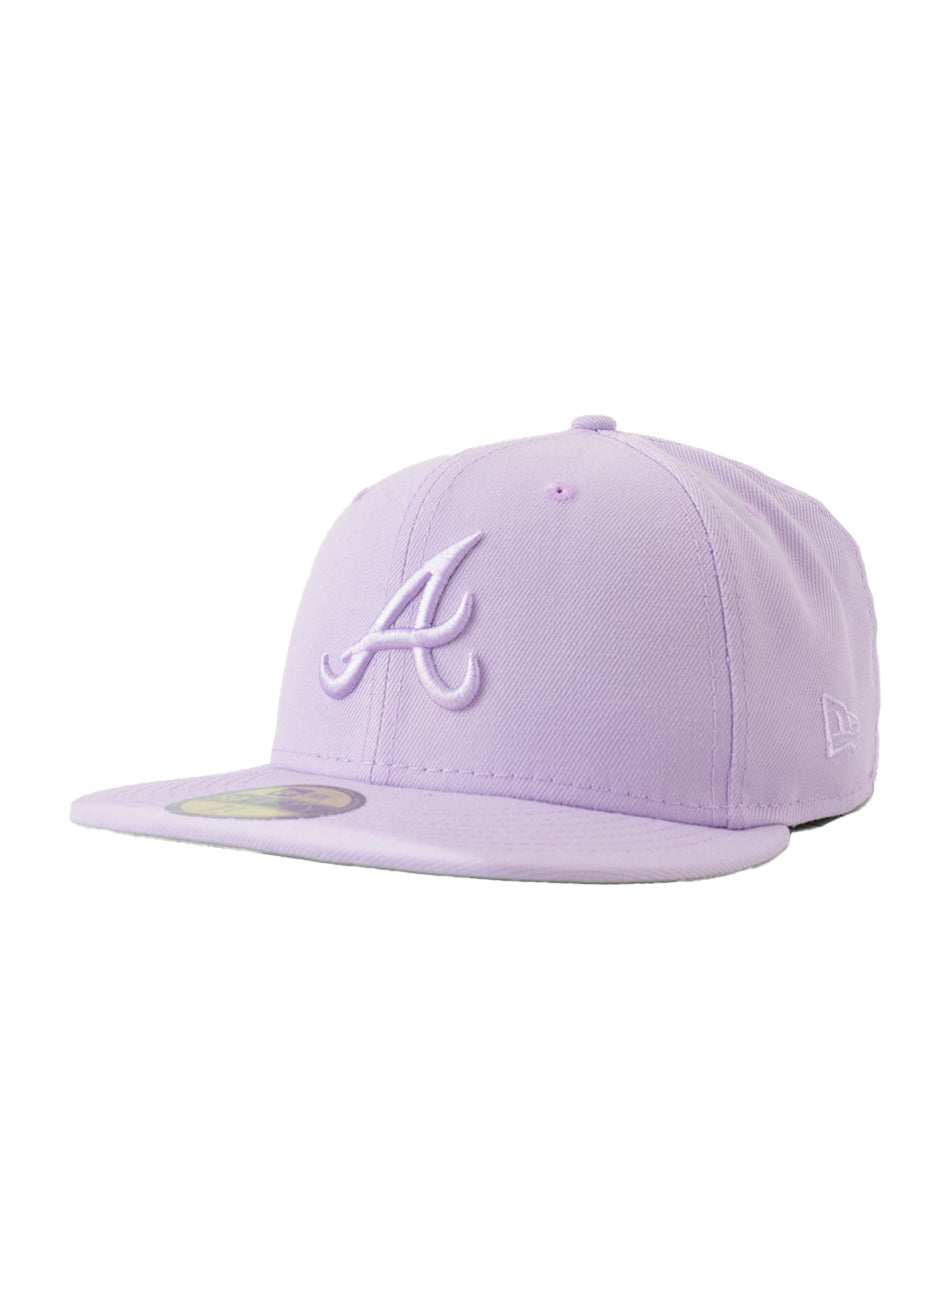 Atlanta Braves Color Pack 5950 Fitted Cap - Light Purple